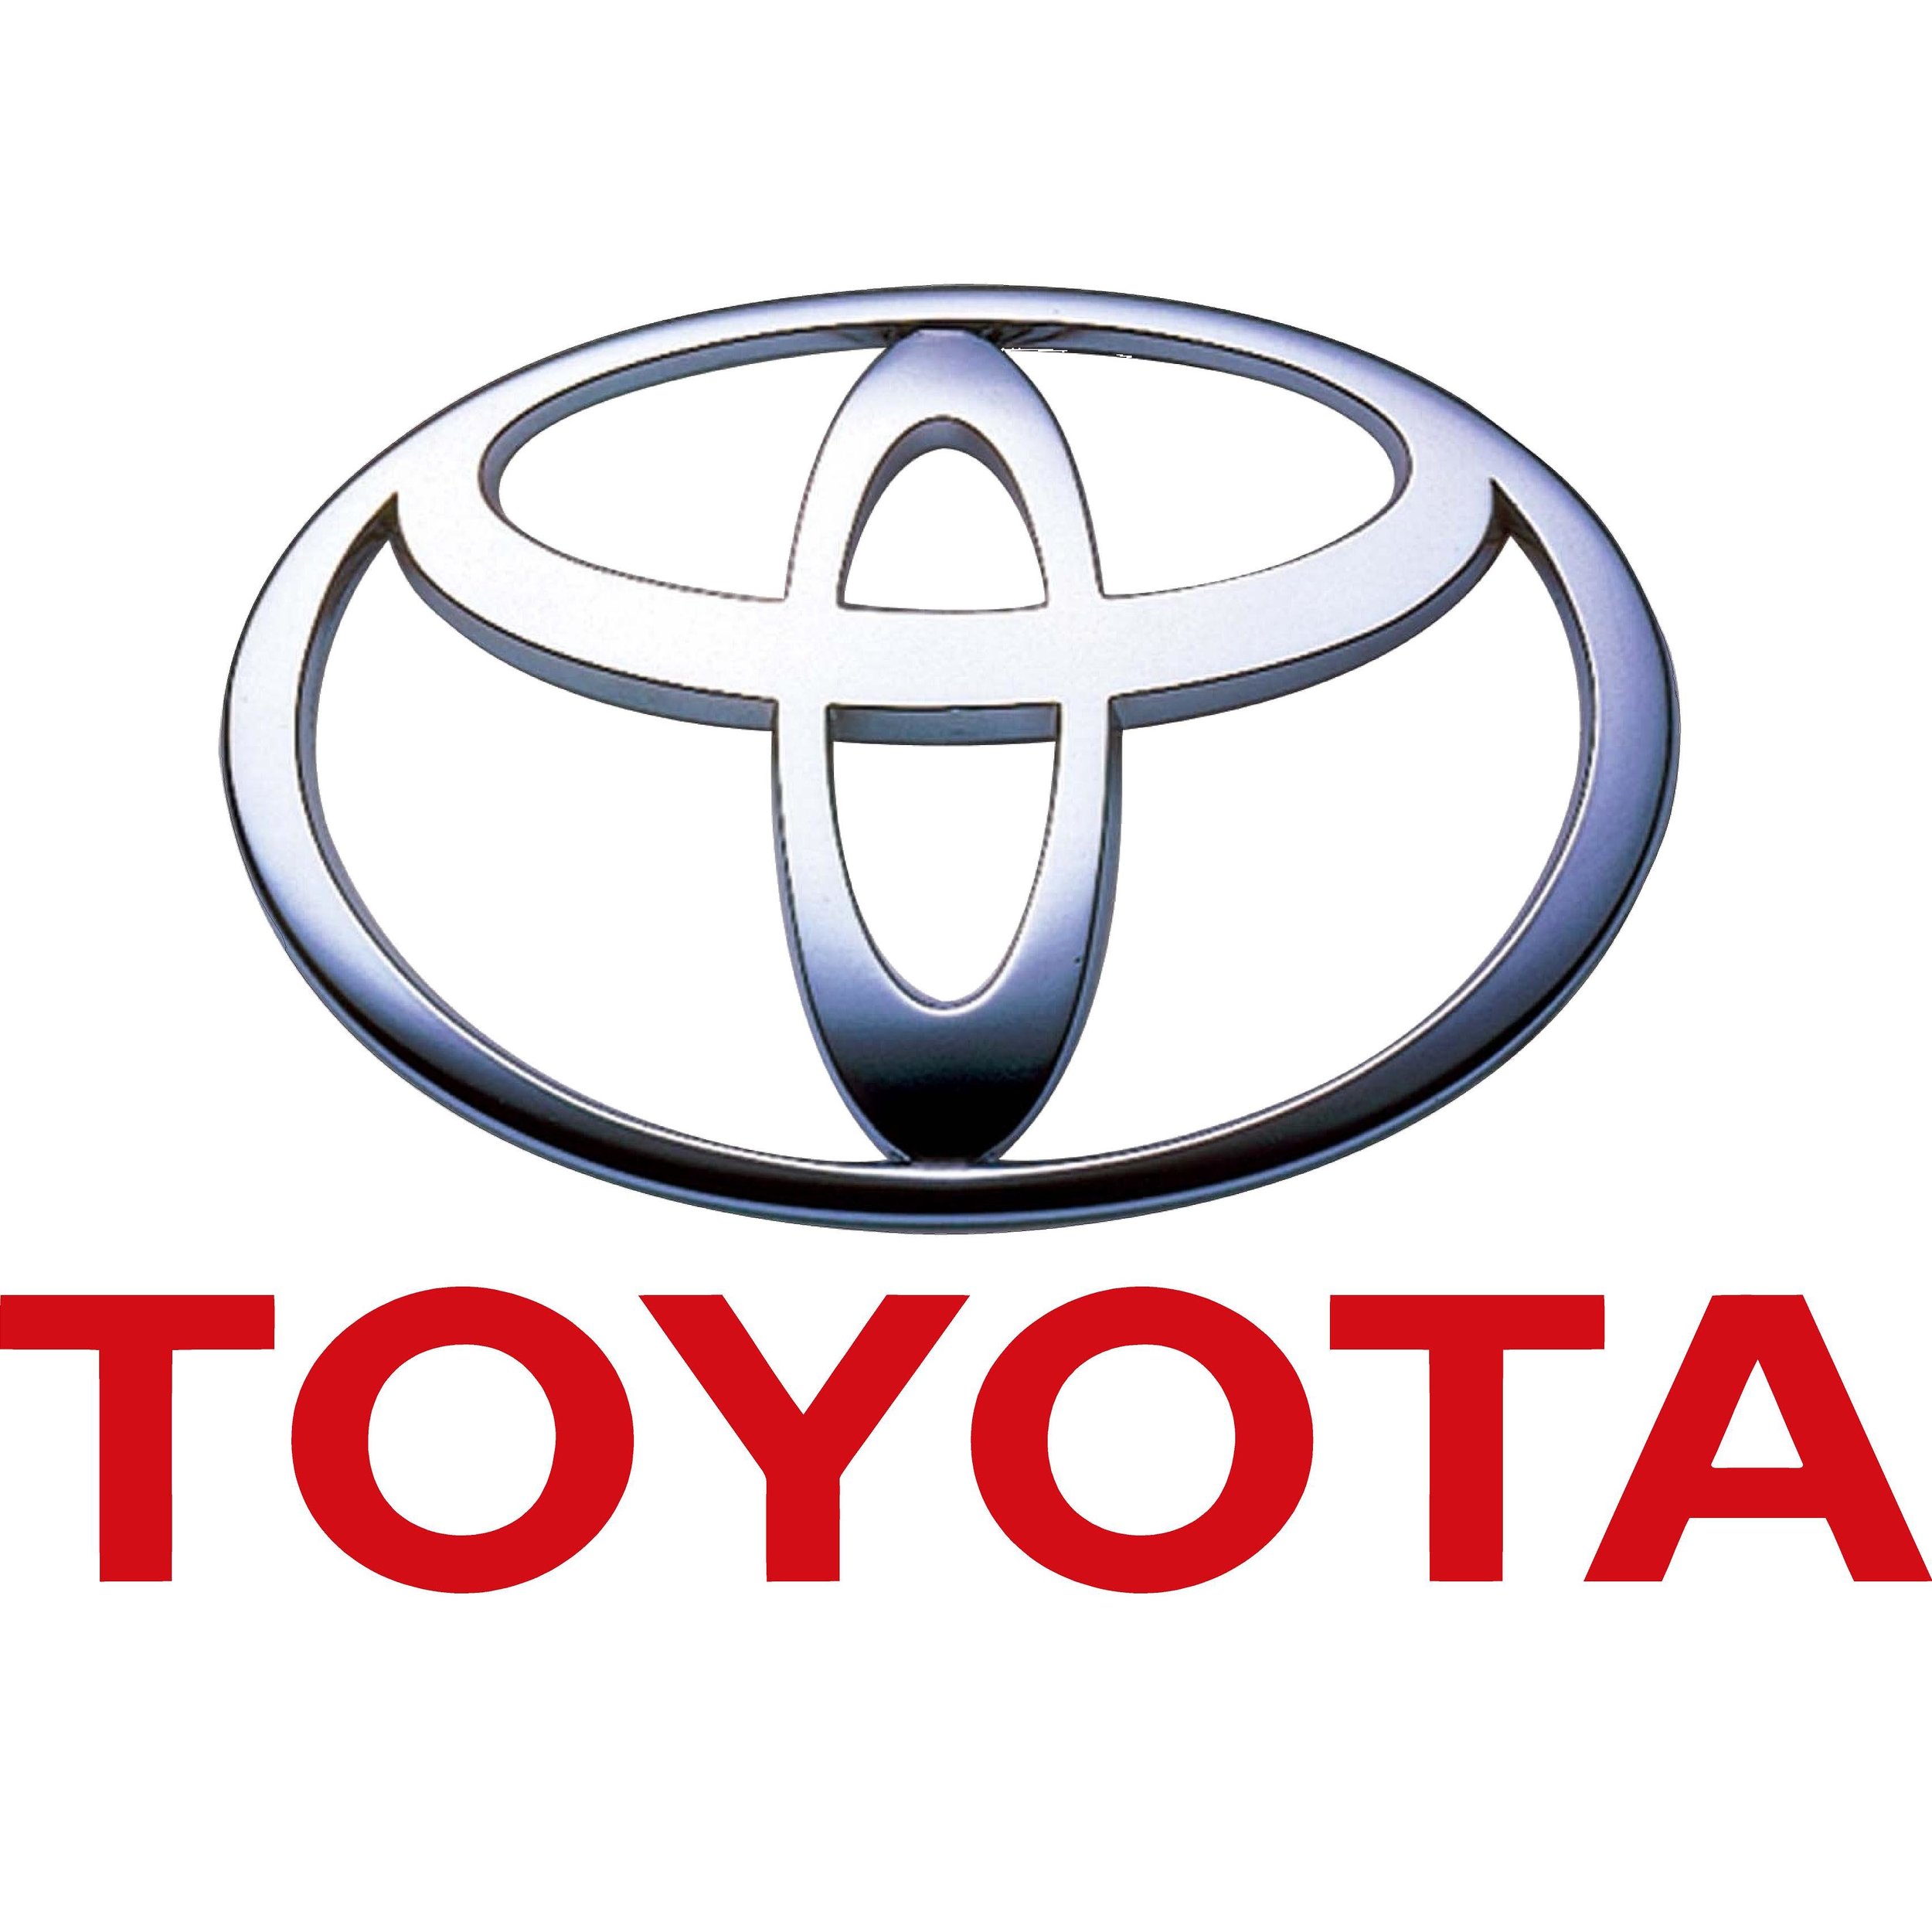 Toyota-emblem-3.jpg